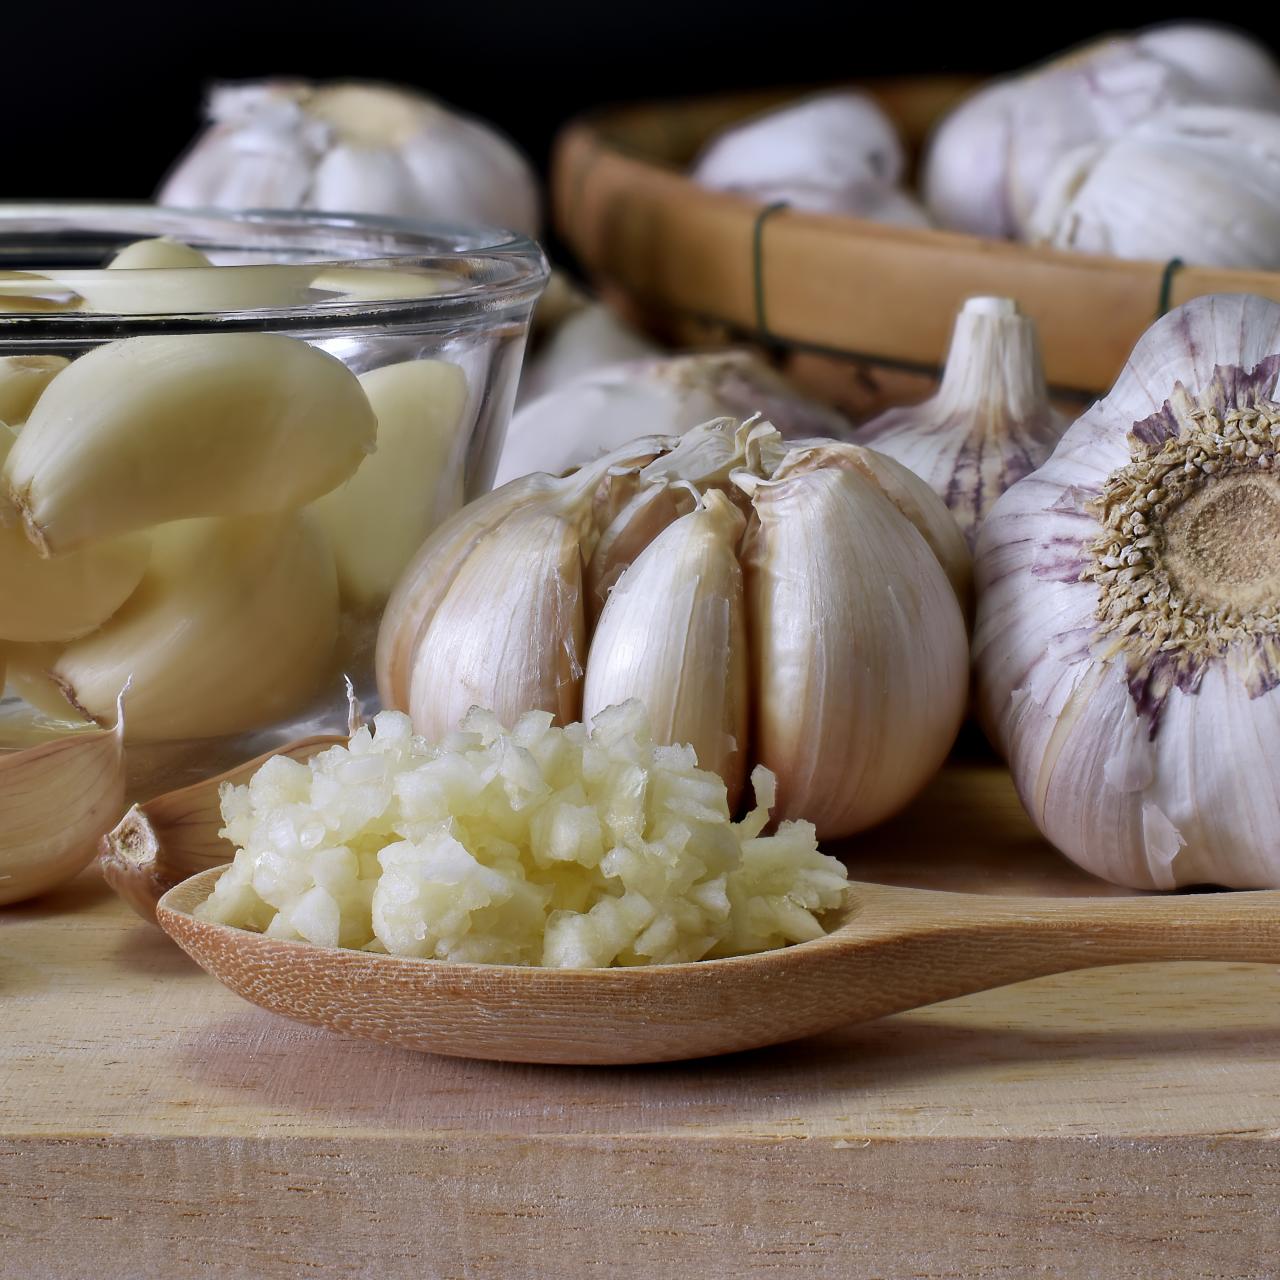 https://food.fnr.sndimg.com/content/dam/images/food/fullset/2023/4/28/Garlic-on-cutting-board-minced-in-spoon.jpg.rend.hgtvcom.1280.1280.suffix/1682714639182.jpeg